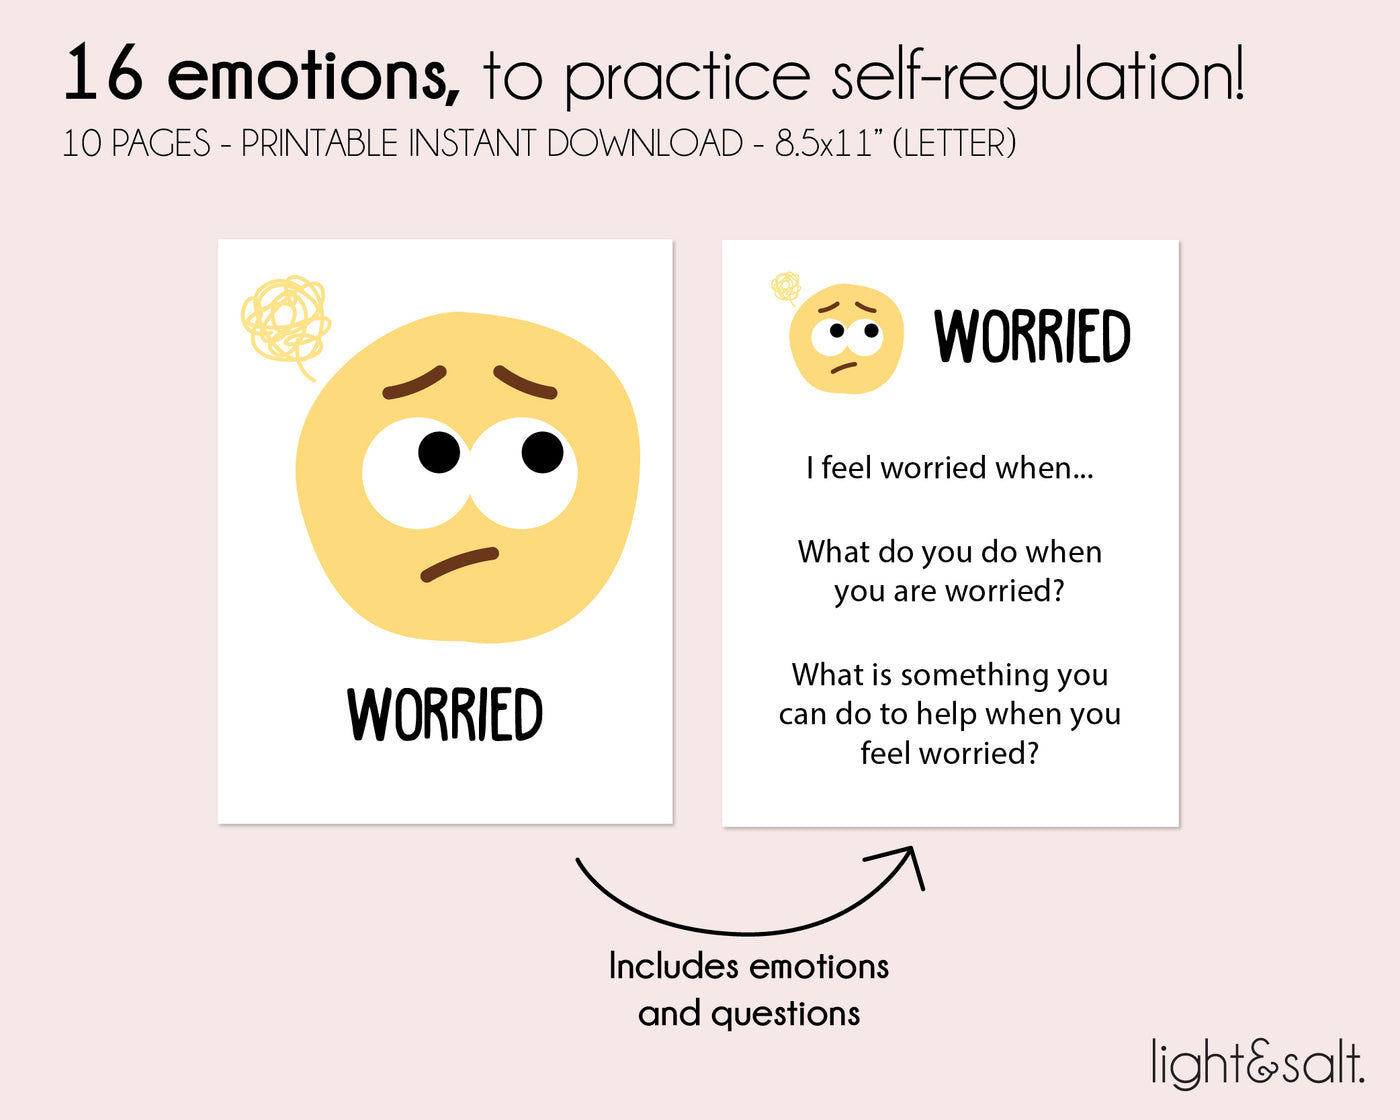 Emotions flash cards